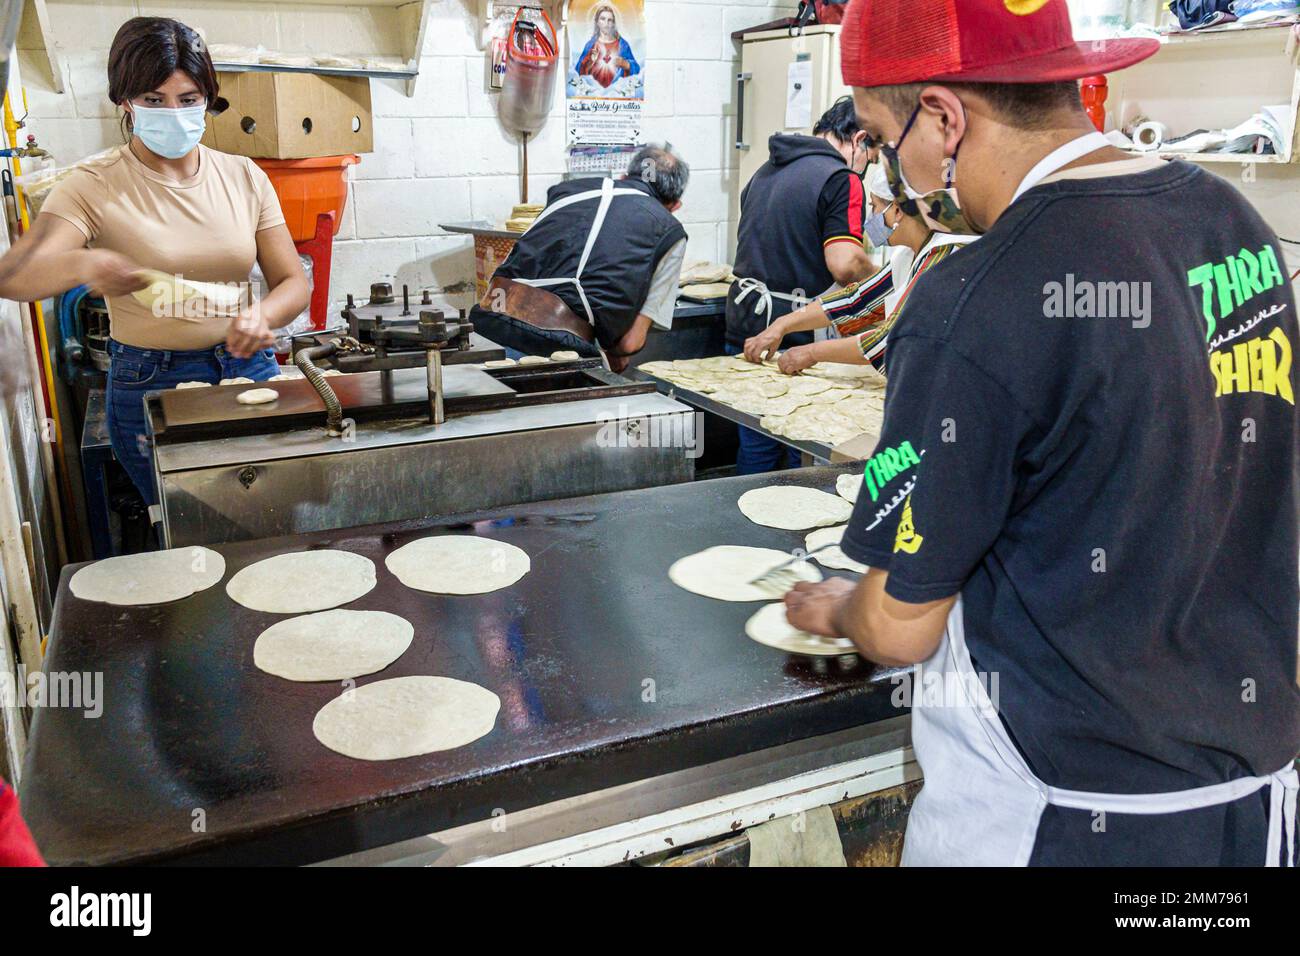 Mexico City,Mercado Medellin,preparing teamwork,grilling tortillas,man men male,woman women lady female,adult adults,resident residents,inside interio Stock Photo